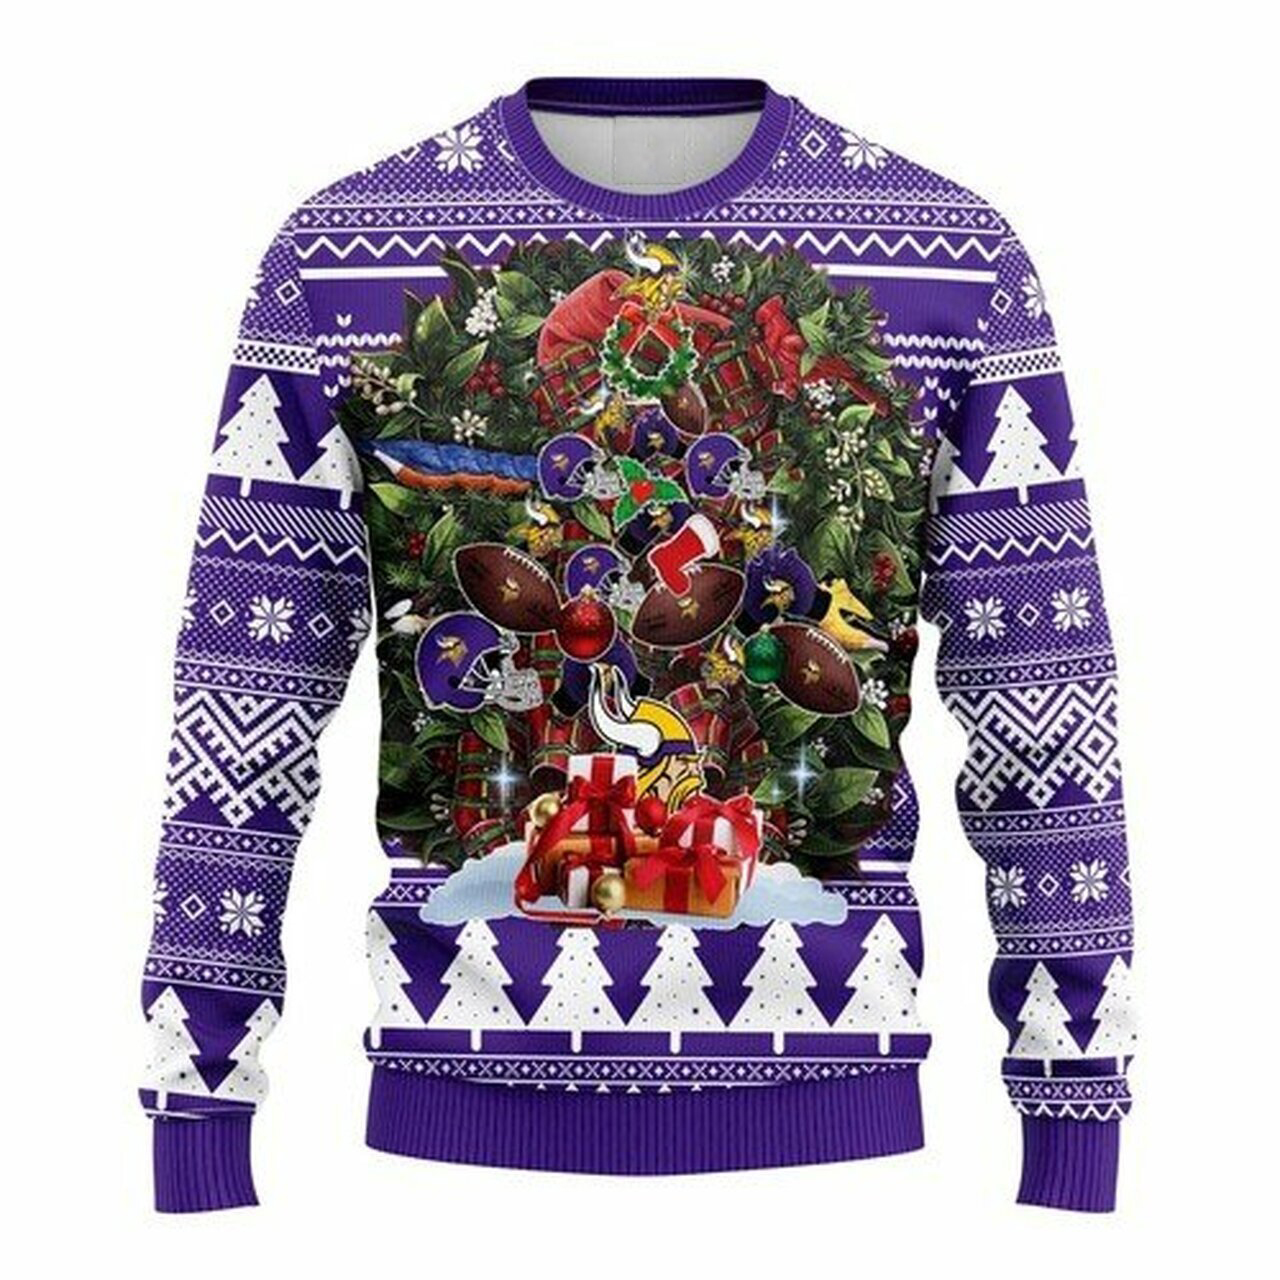 [ HOT ] NFL Minnesota Vikings christmas tree ugly sweater – Saleoff 030122